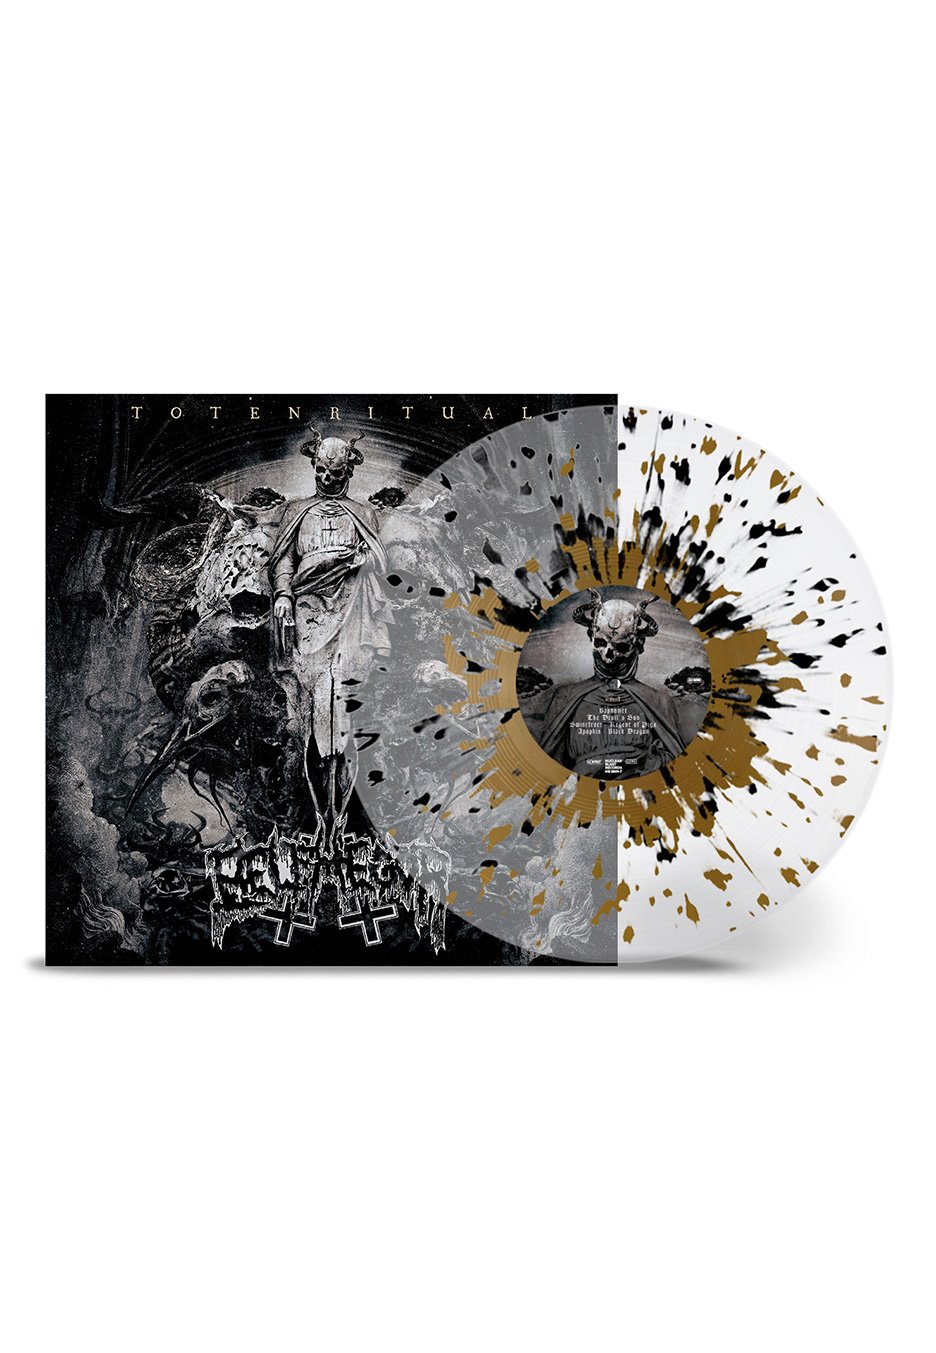 Belphegor - Totenritual Ltd. Crystal Clear w/ Black/Gold - Splattered Vinyl